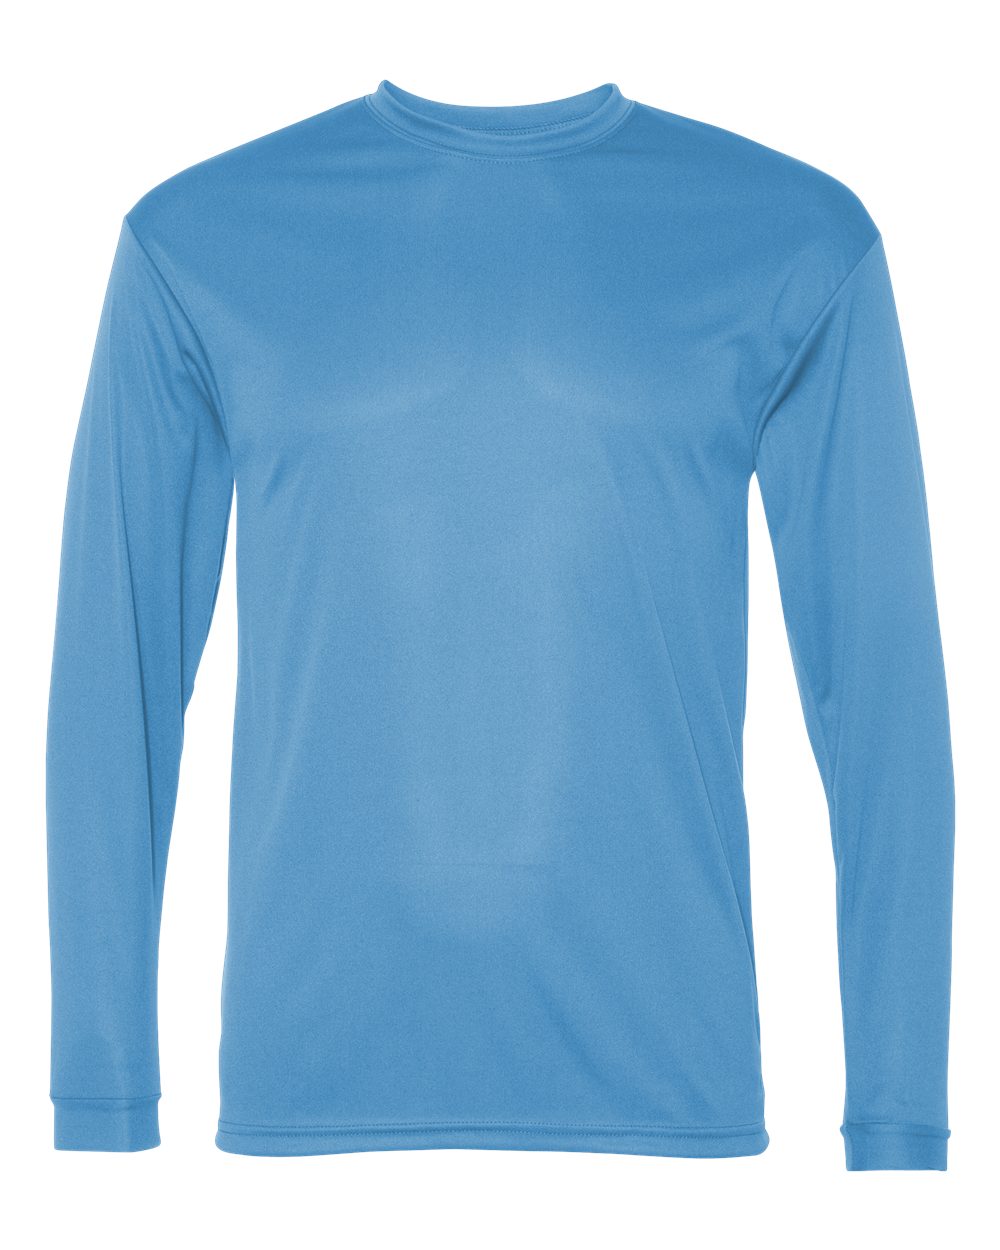 C2 Sport - Performance Long Sleeve T-Shirt